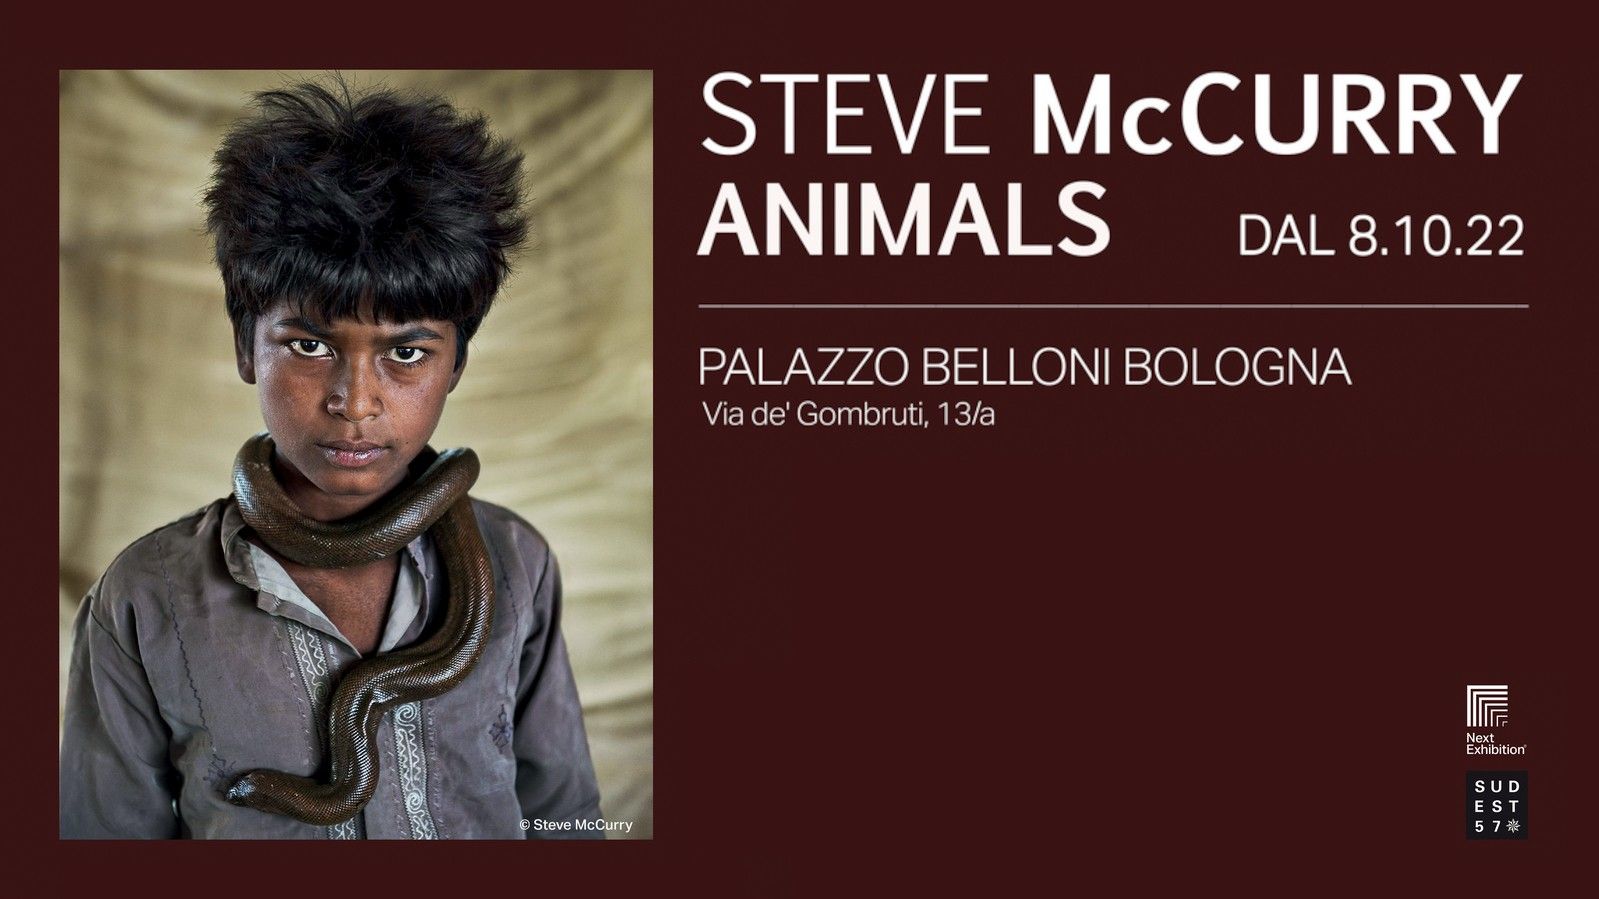 Steve McCurry - Animals